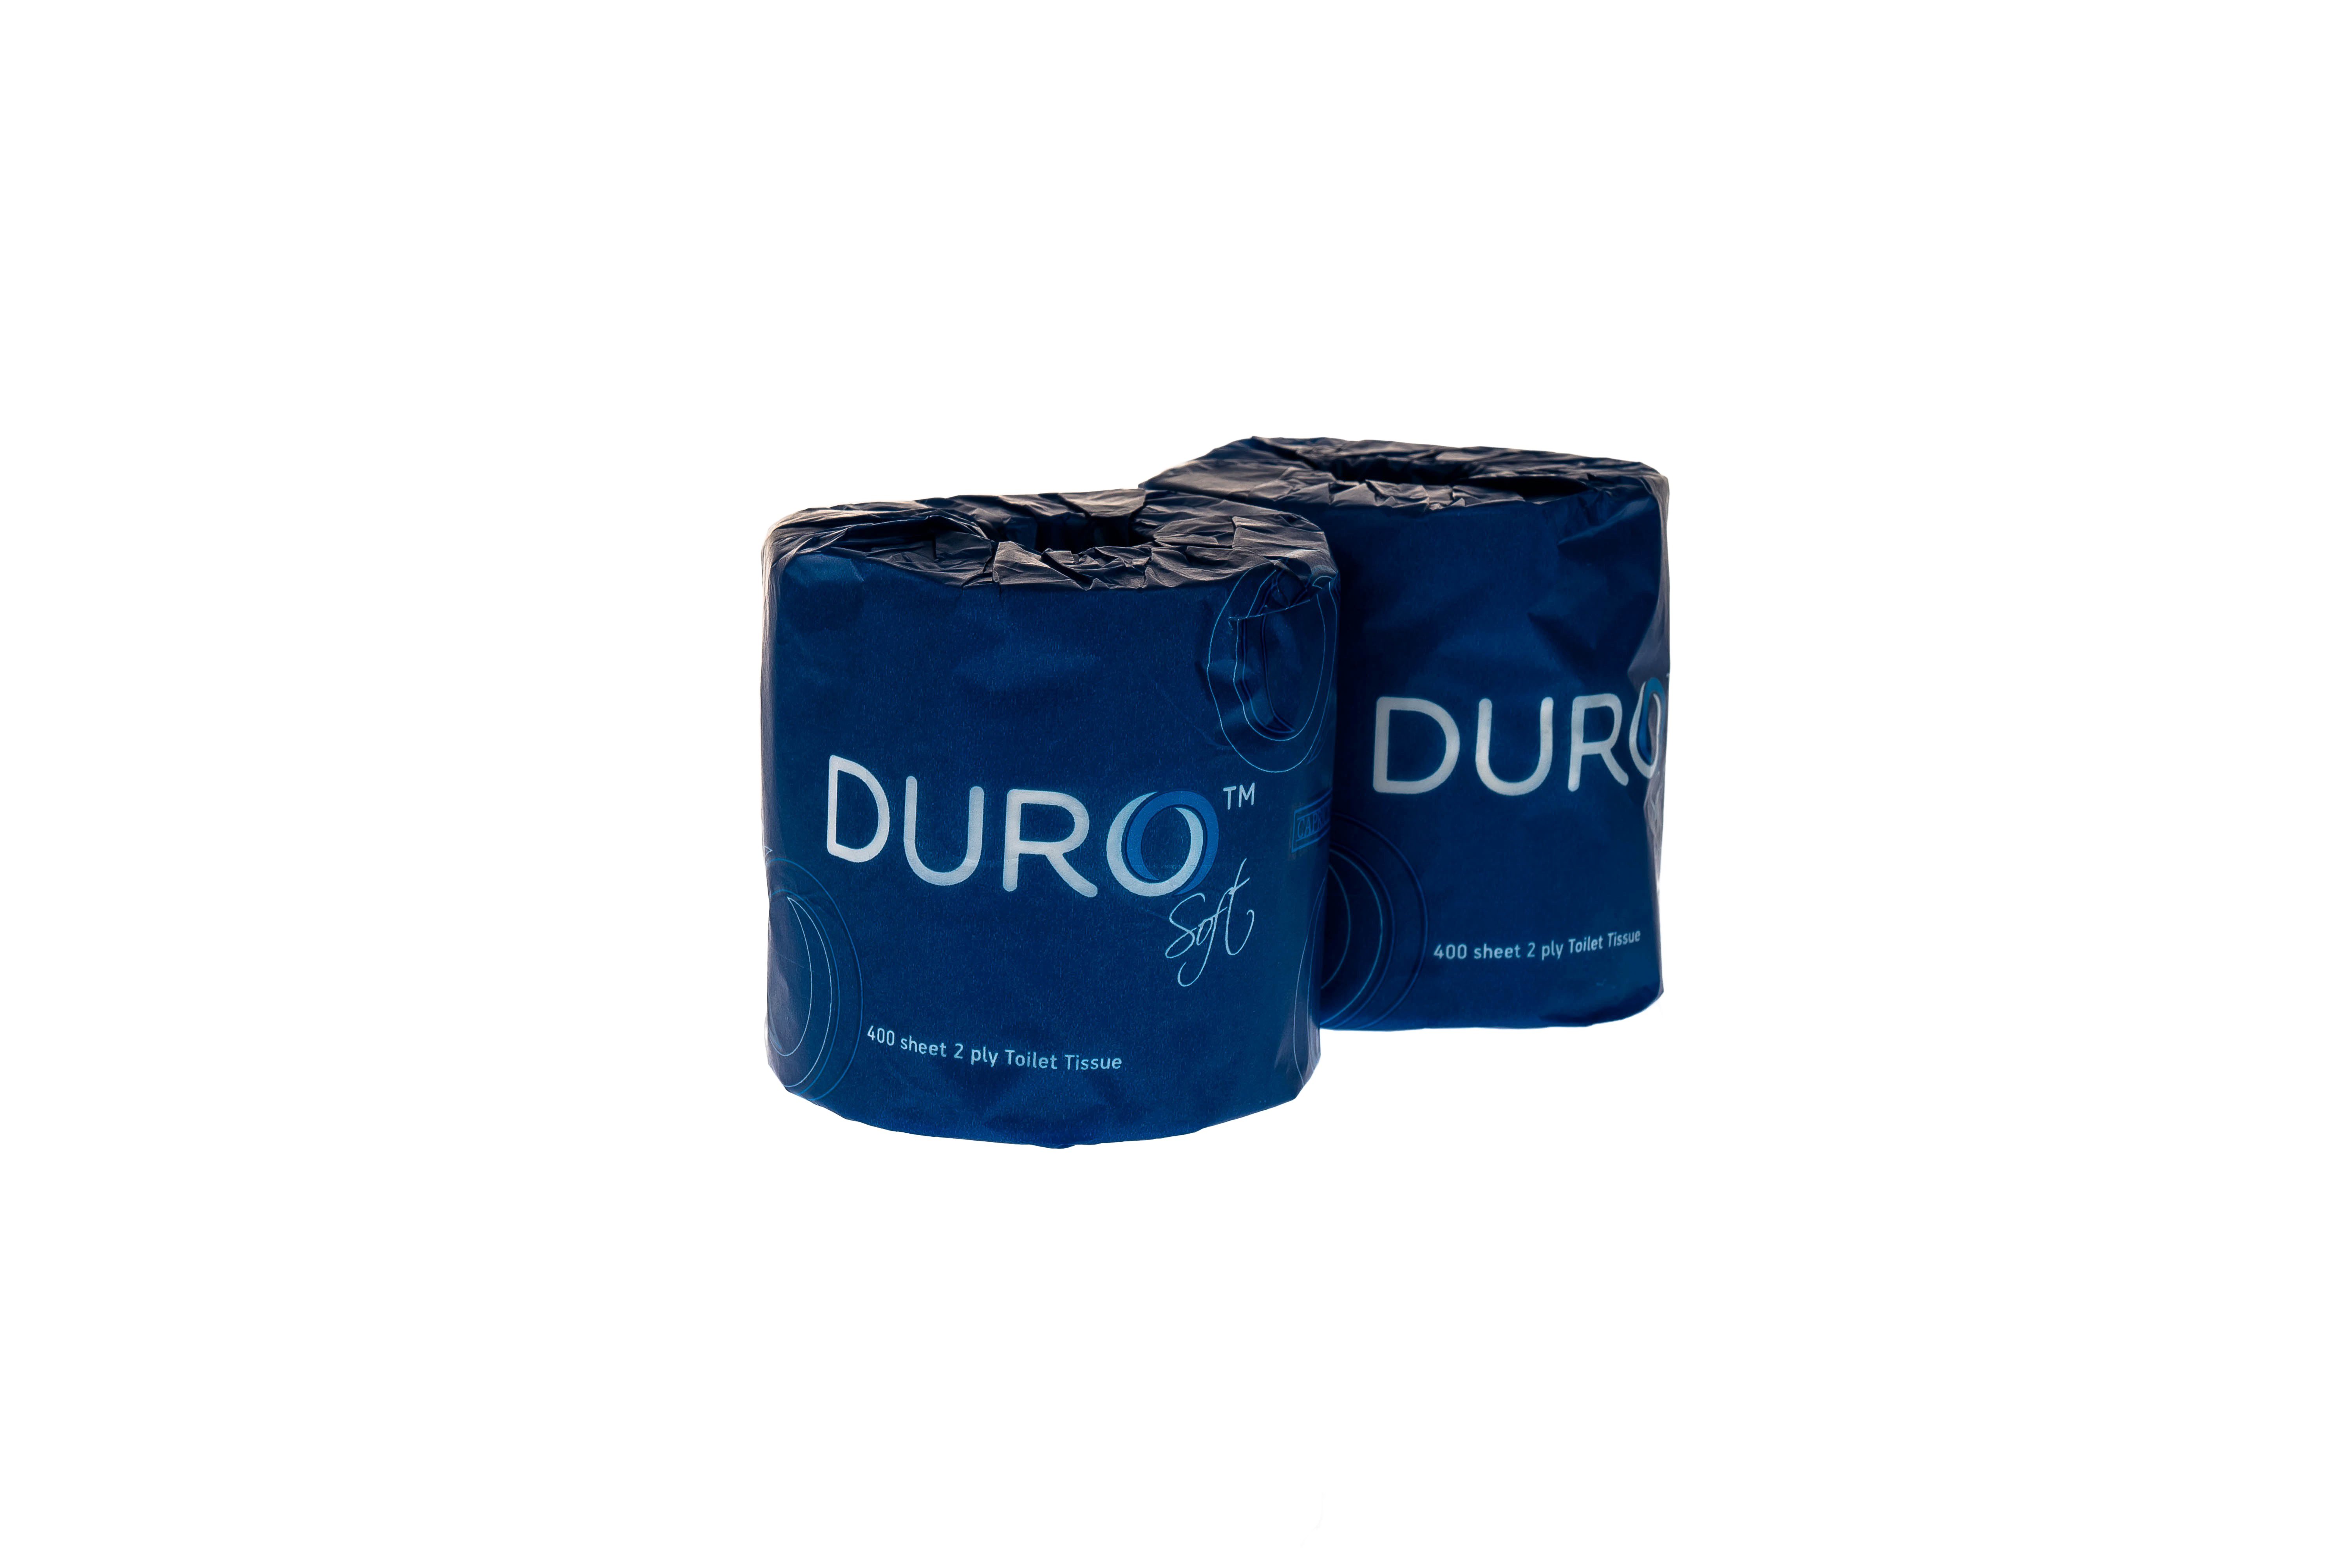 Caprice Duro Toilet Rolls 2Ply 400sheets - 48 Rolls per cart